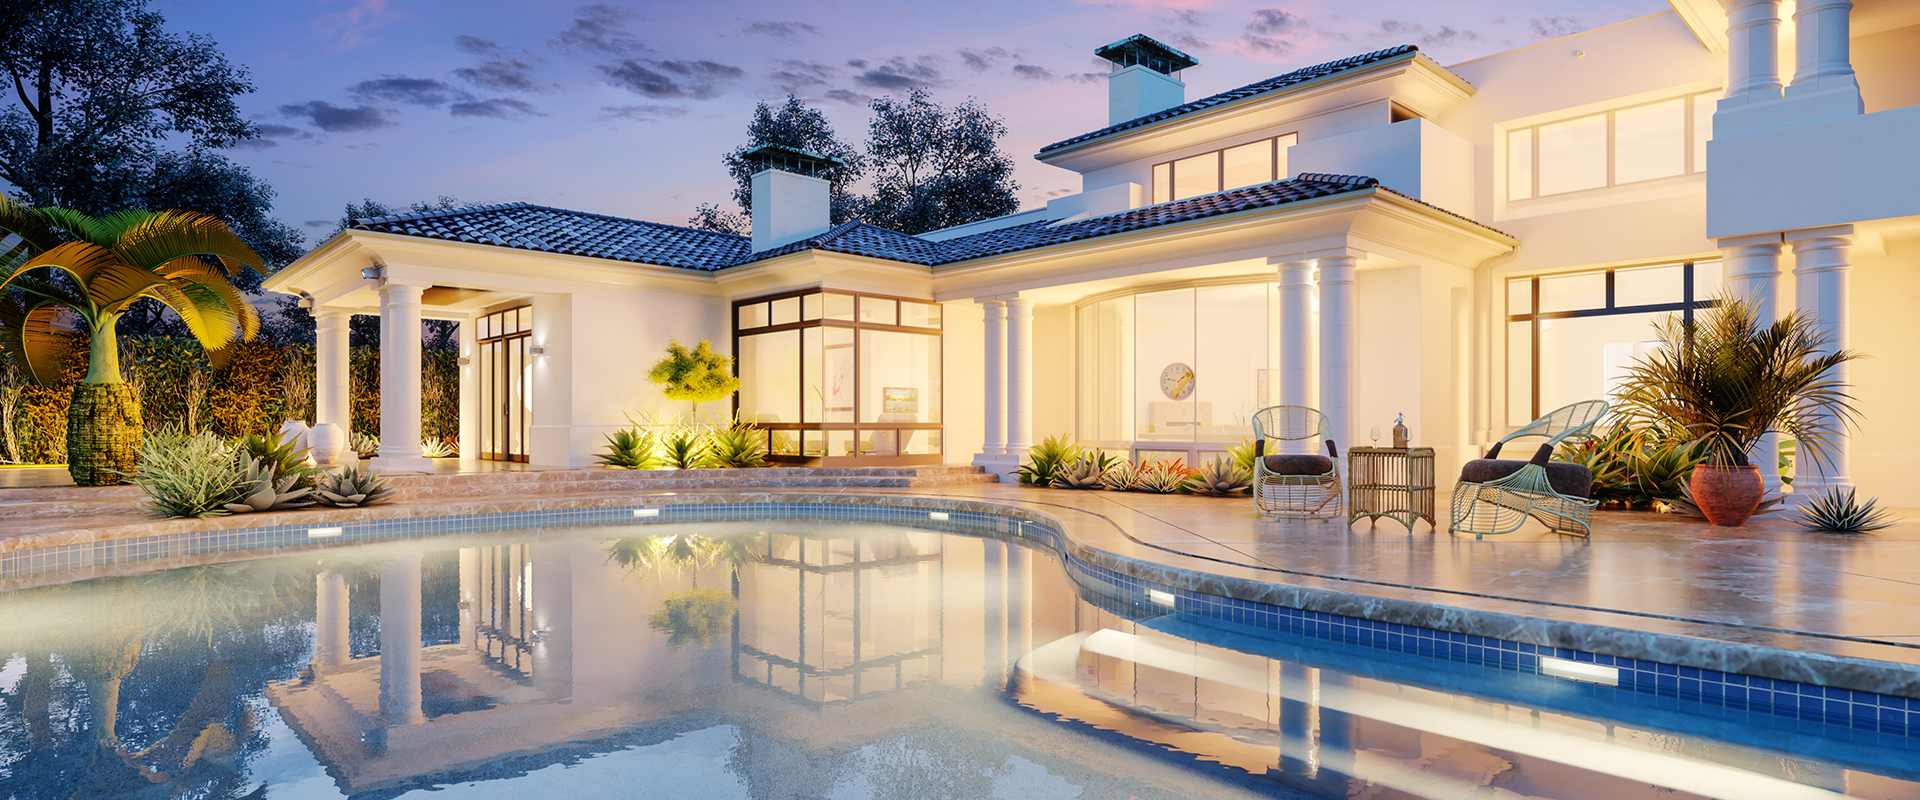 DeRenzis Real Estate PV Brokers - Palos Verdes Homes For Sale